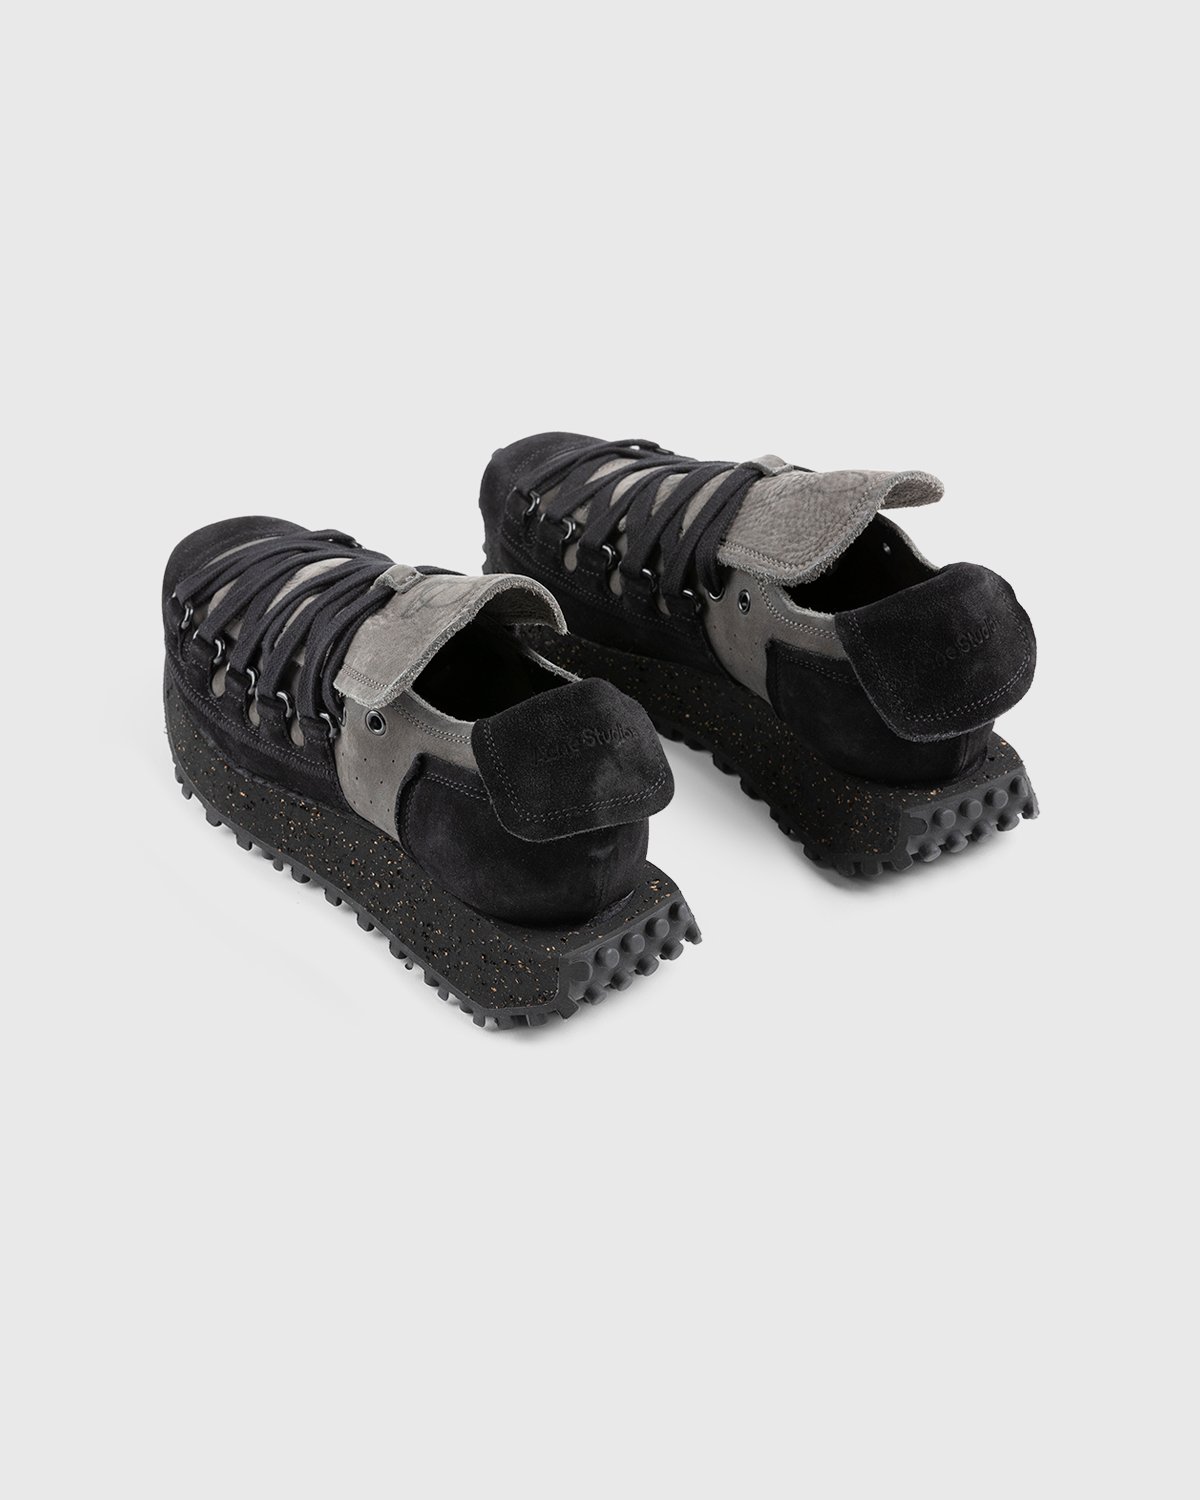 Acne Studios - Nofo Lace-Up Sneakers Grey/Black - Footwear - Black - Image 3